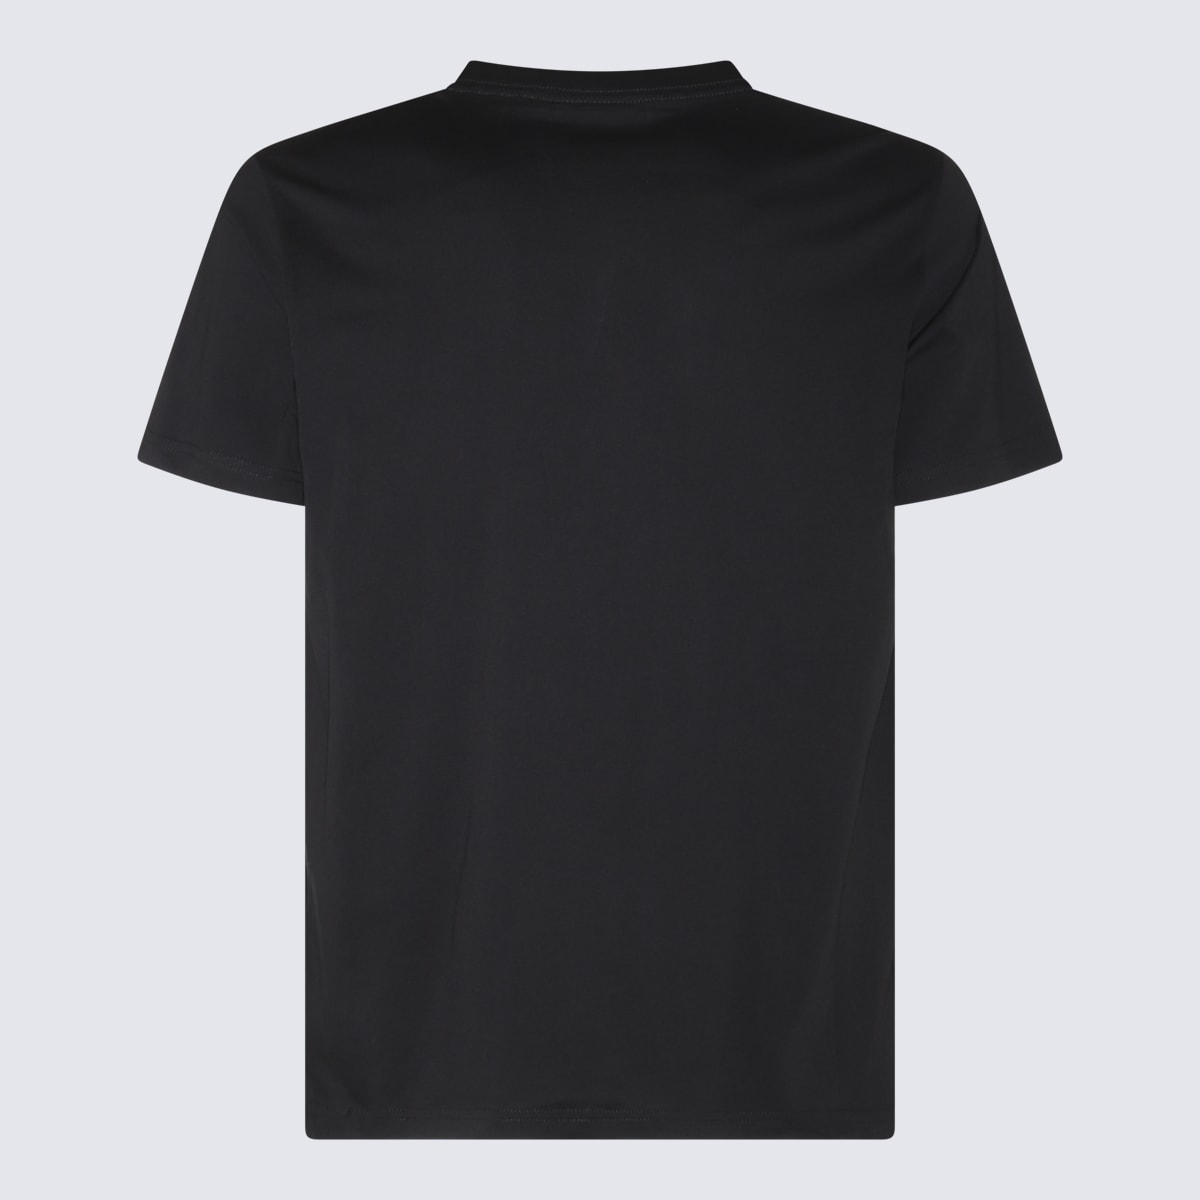 Paul Smith Black Cotton T-shirt